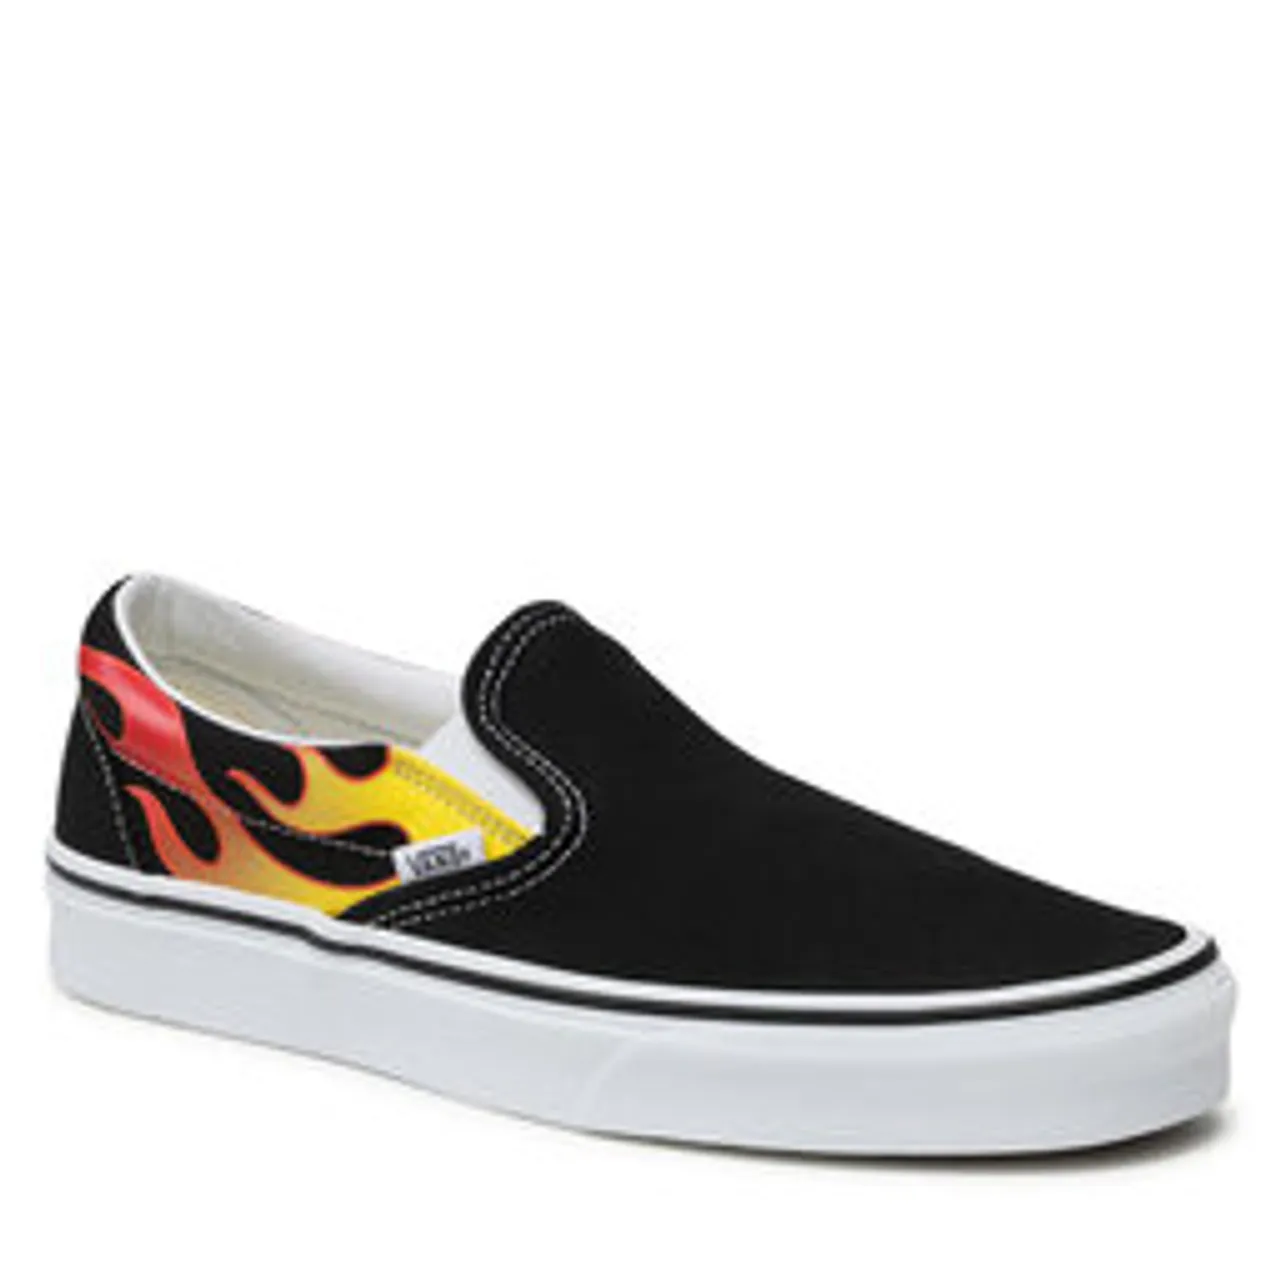 Sneakers aus Stoff Vans Classic Slip-On VN0A38F7PHN1 (Flame) Black/Black/Tr Wht